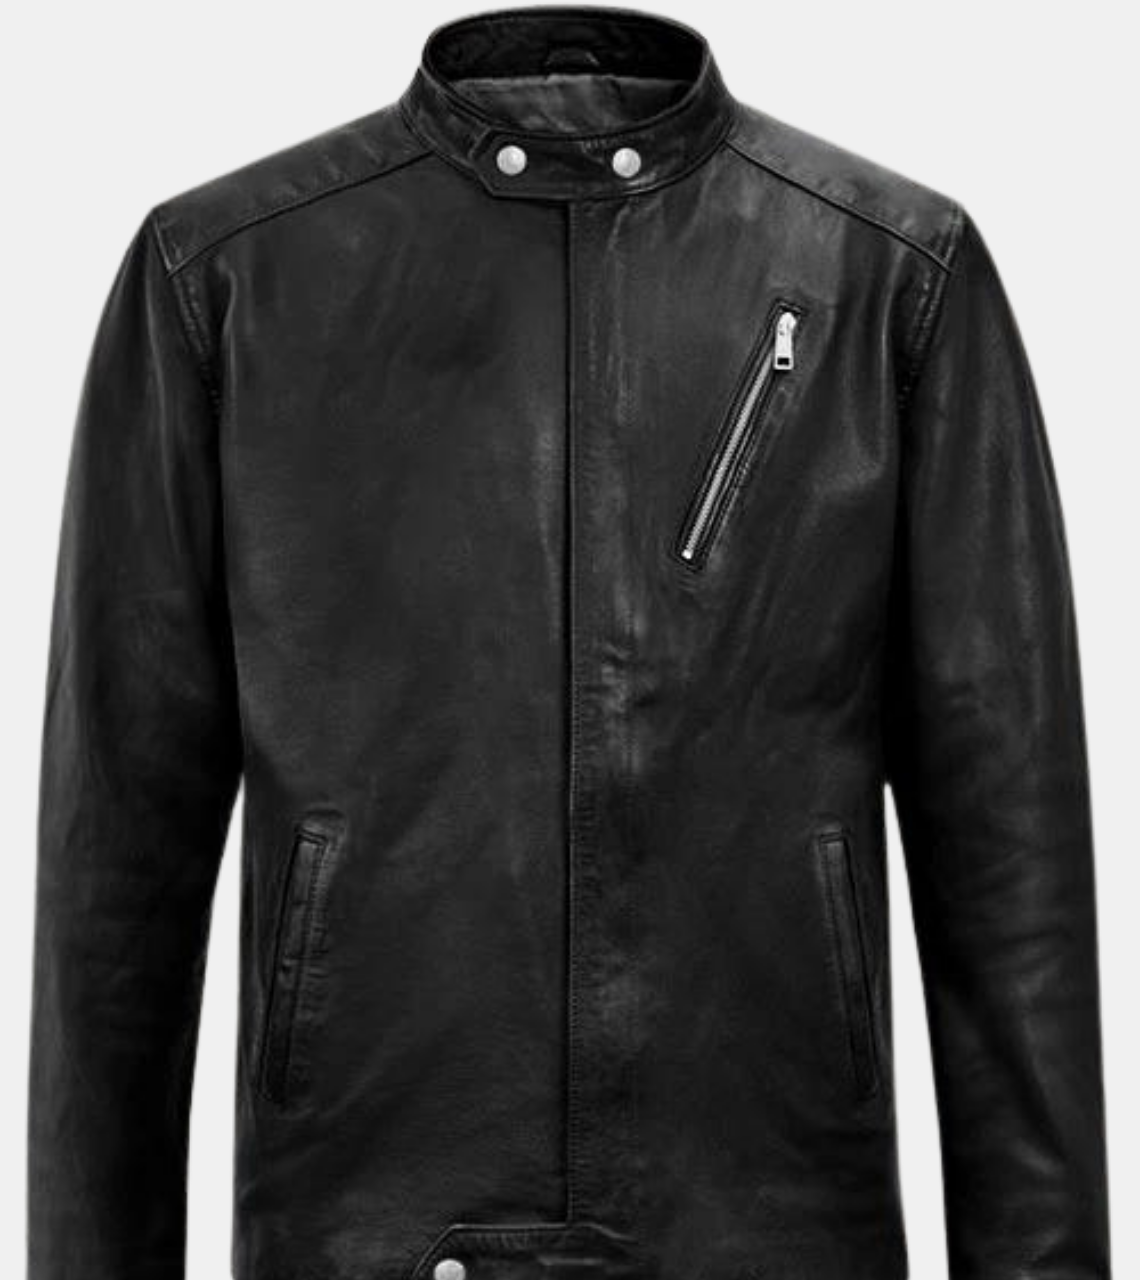 Gespare Men's Black Biker's Leather Jacket